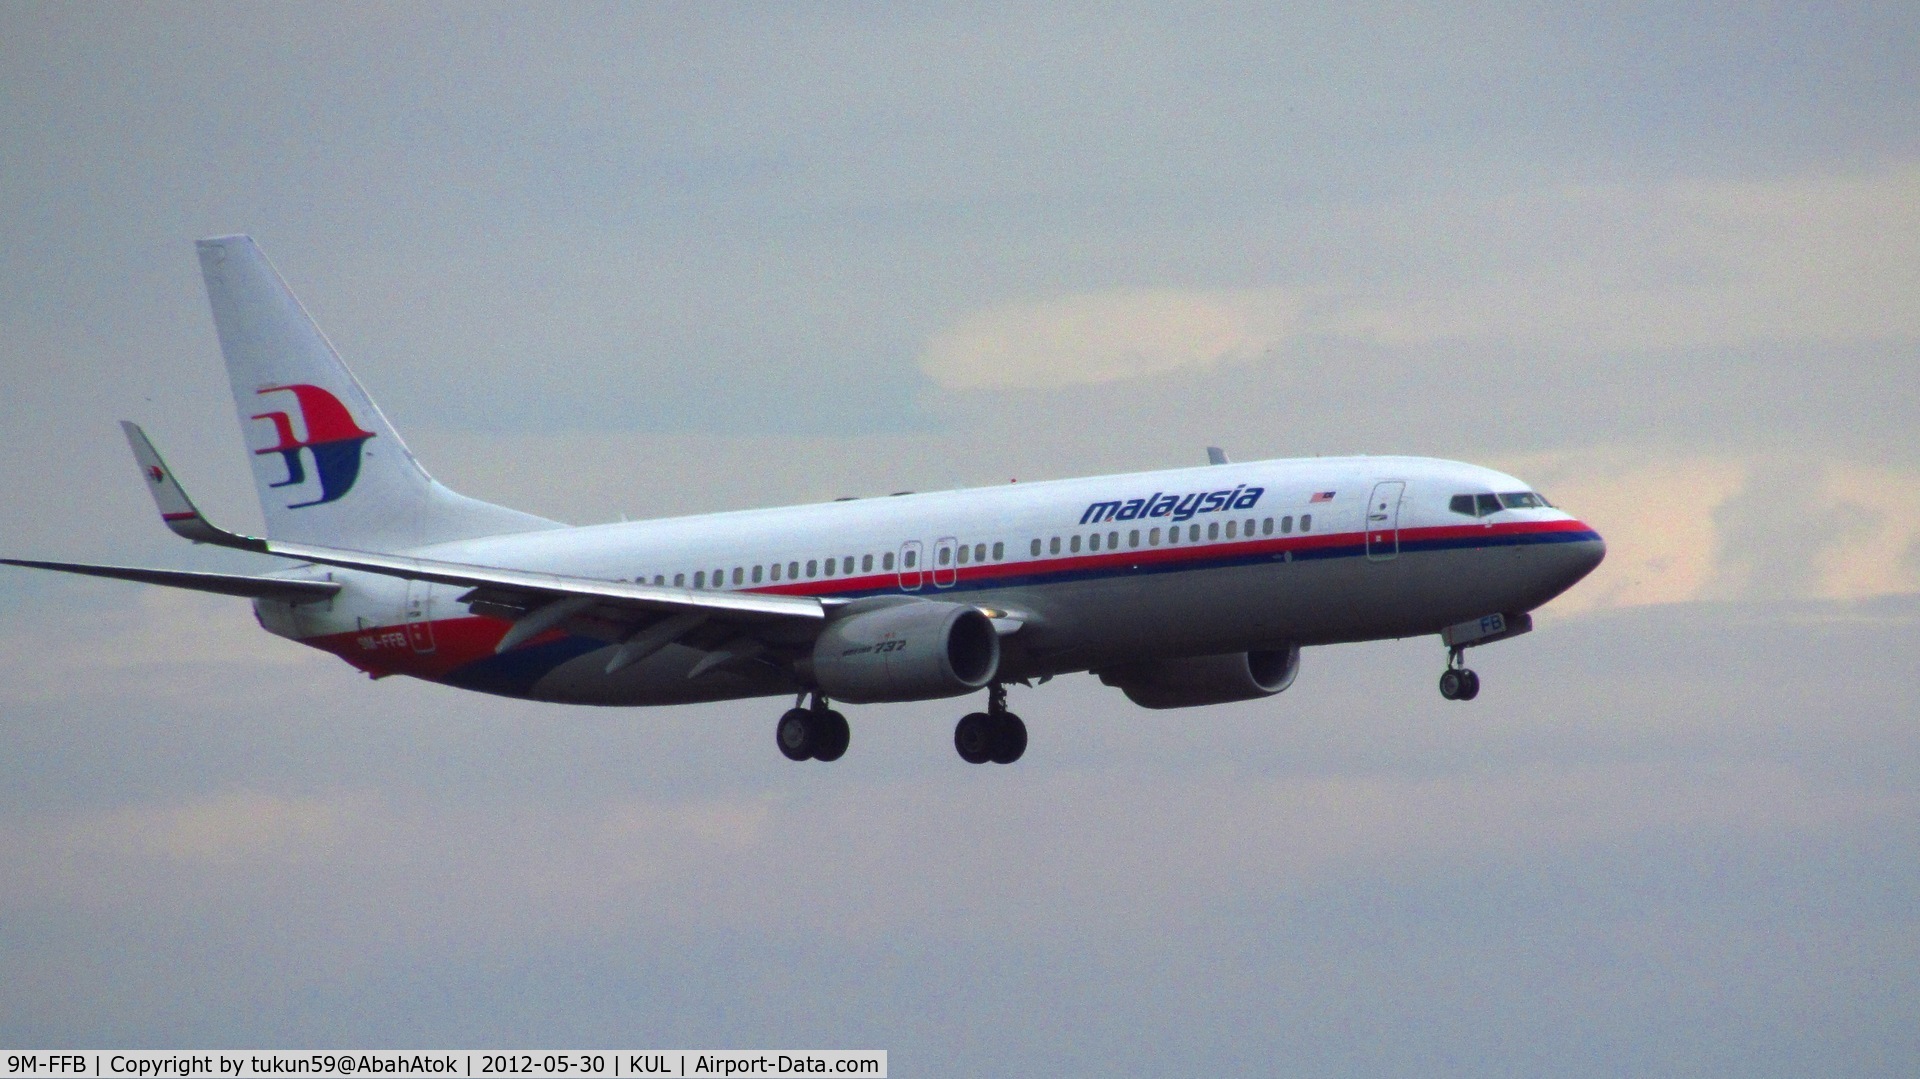 9M-FFB, 2006 Boeing 737-8Q8 C/N 30702, Malaysia Airlines